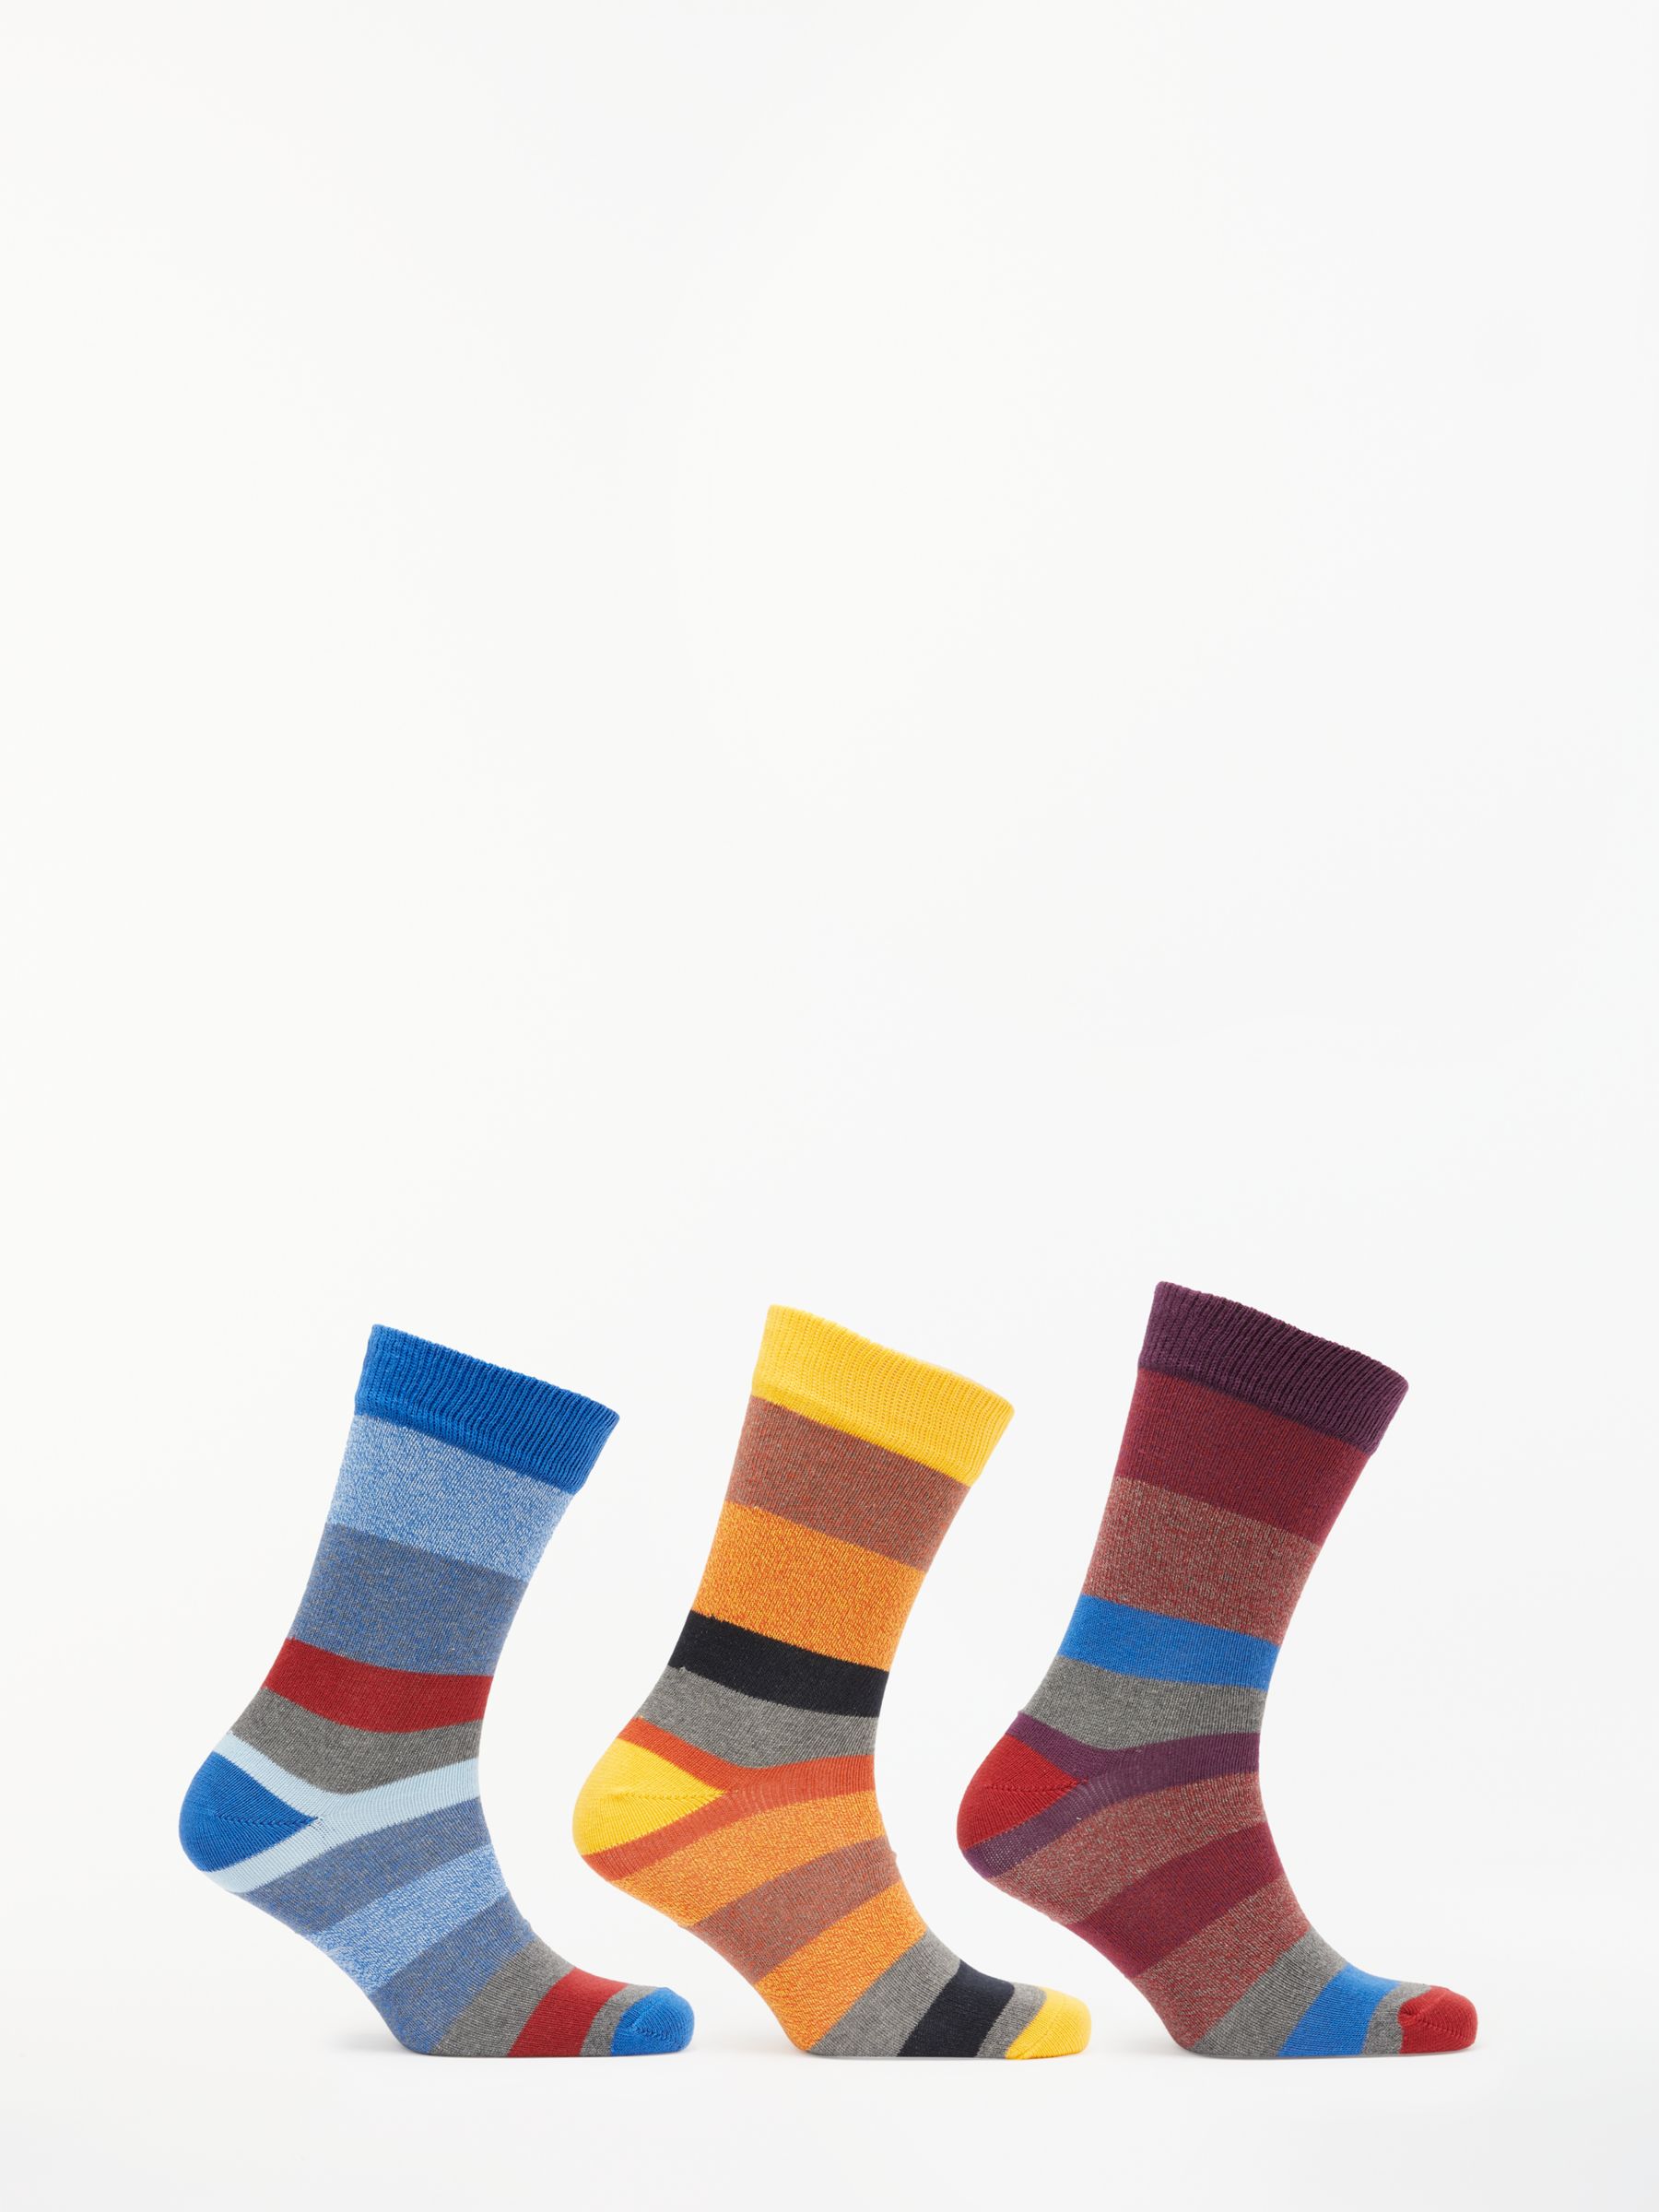 John Lewis & Partners Twisted Stripe Socks, Pack of 3, Blue/Yellow/Purple